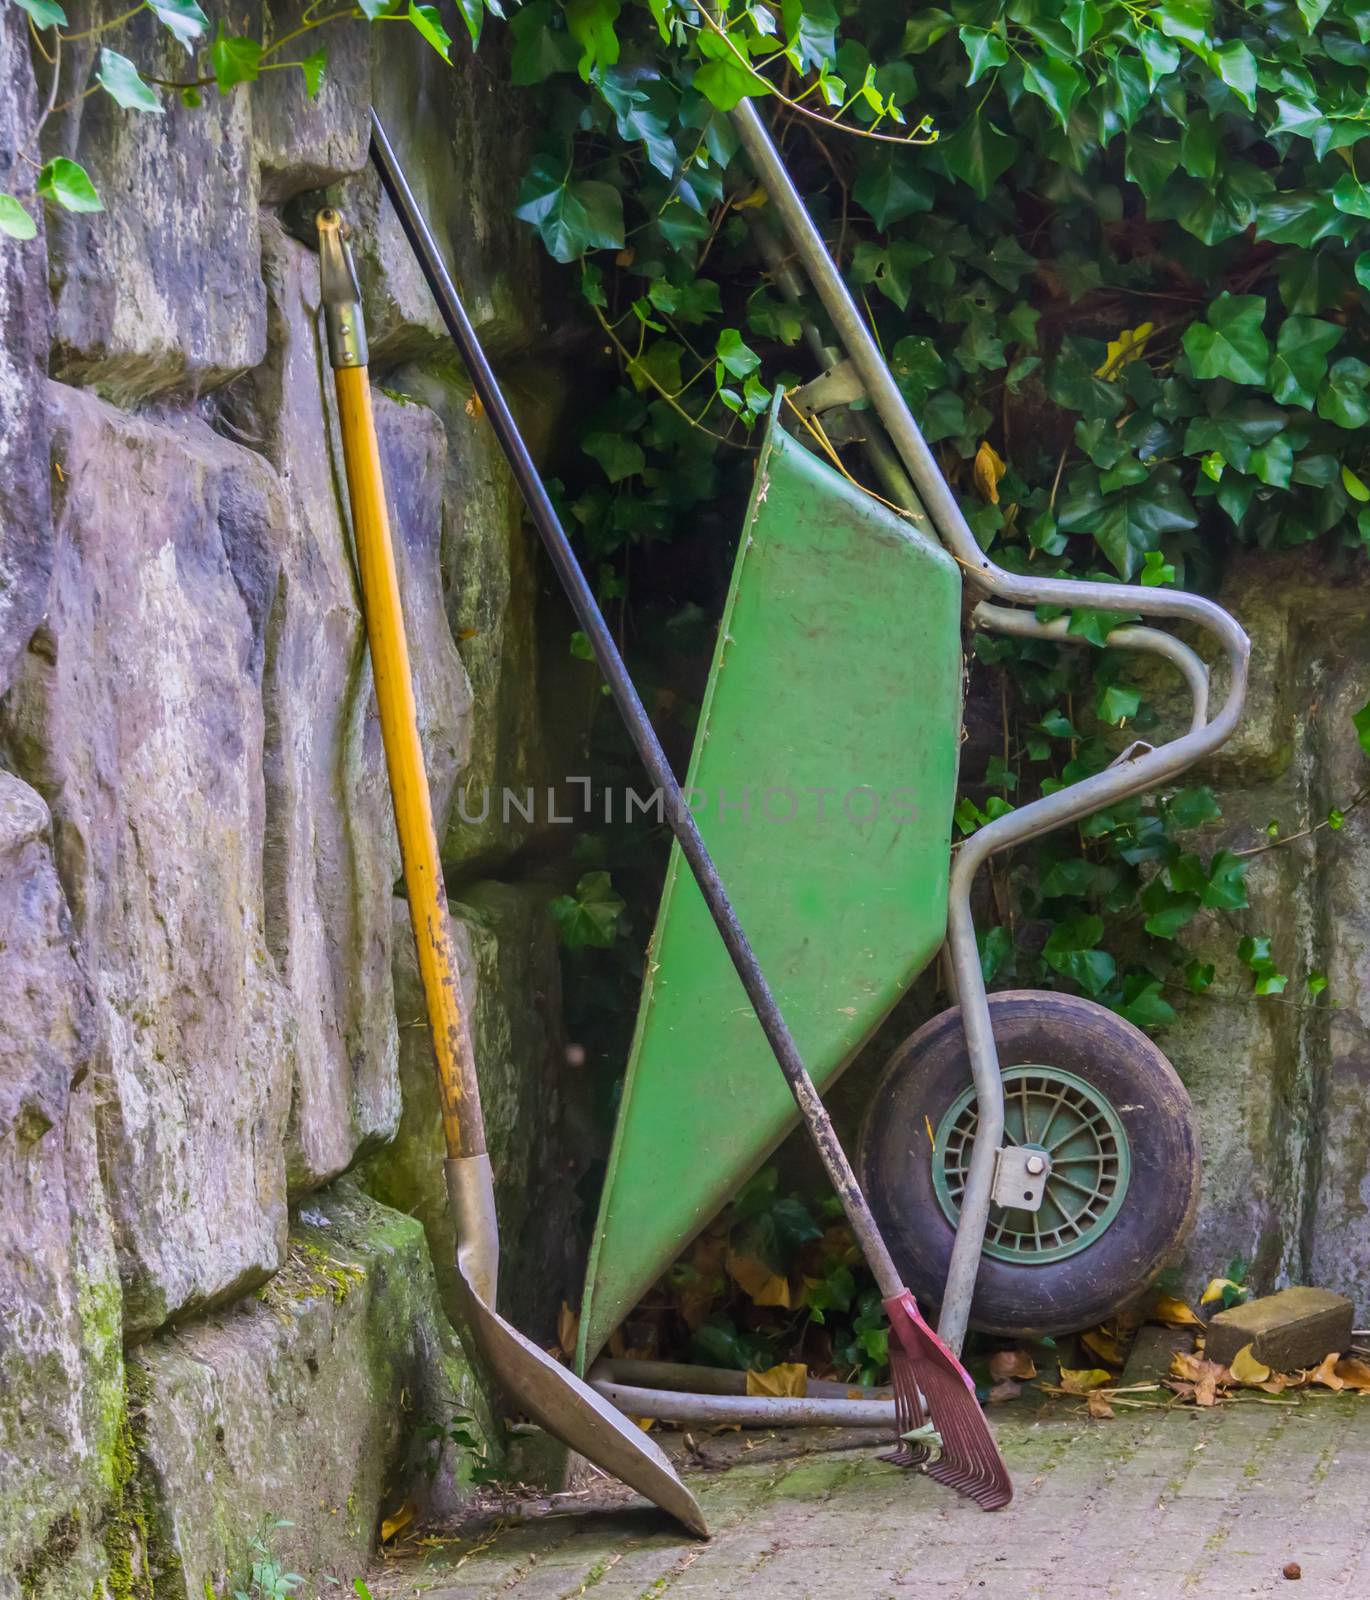 Basic gardening equipment, a wheelbarrow with a shovel and rigid, Garden upkeep tools by charlottebleijenberg